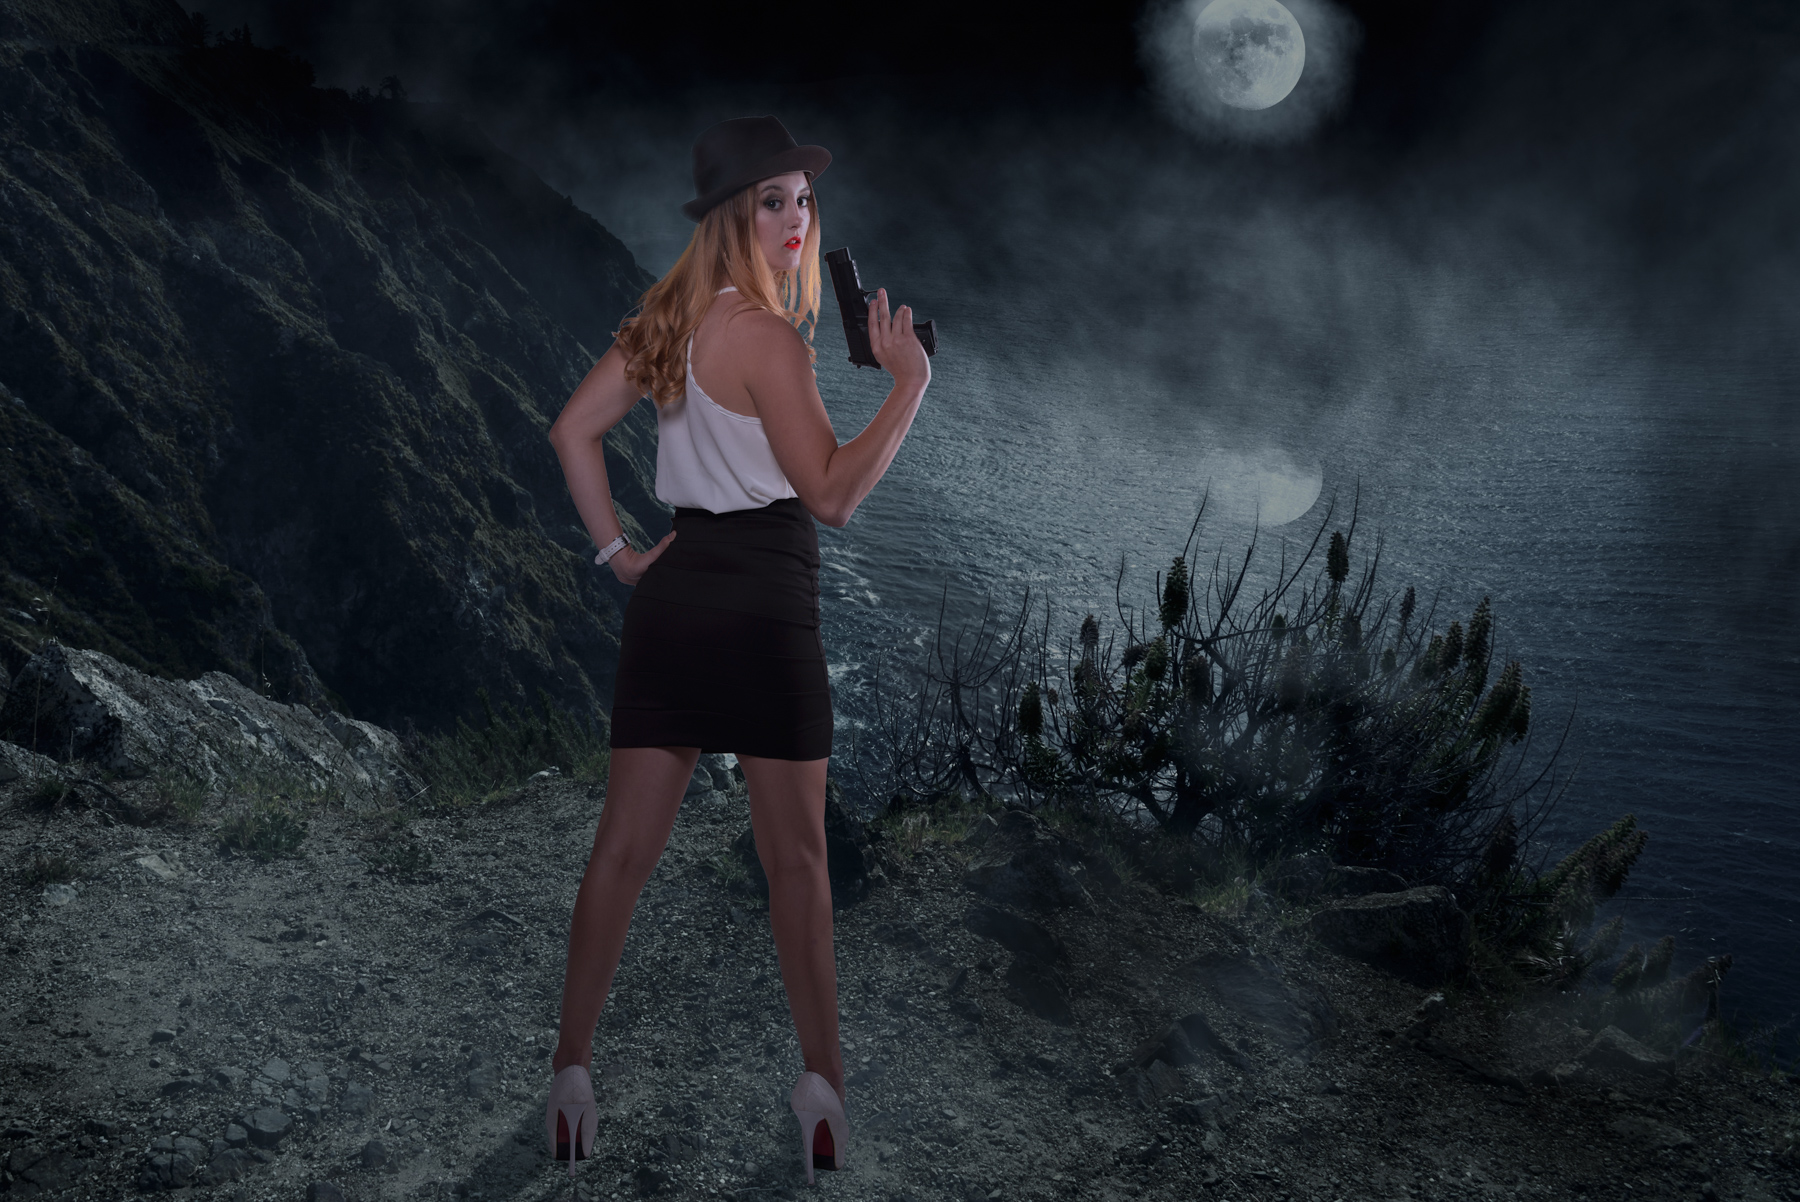 woman with gun on a foggy night fog moon sea seashore surreal moon clouds dark cool.jpg